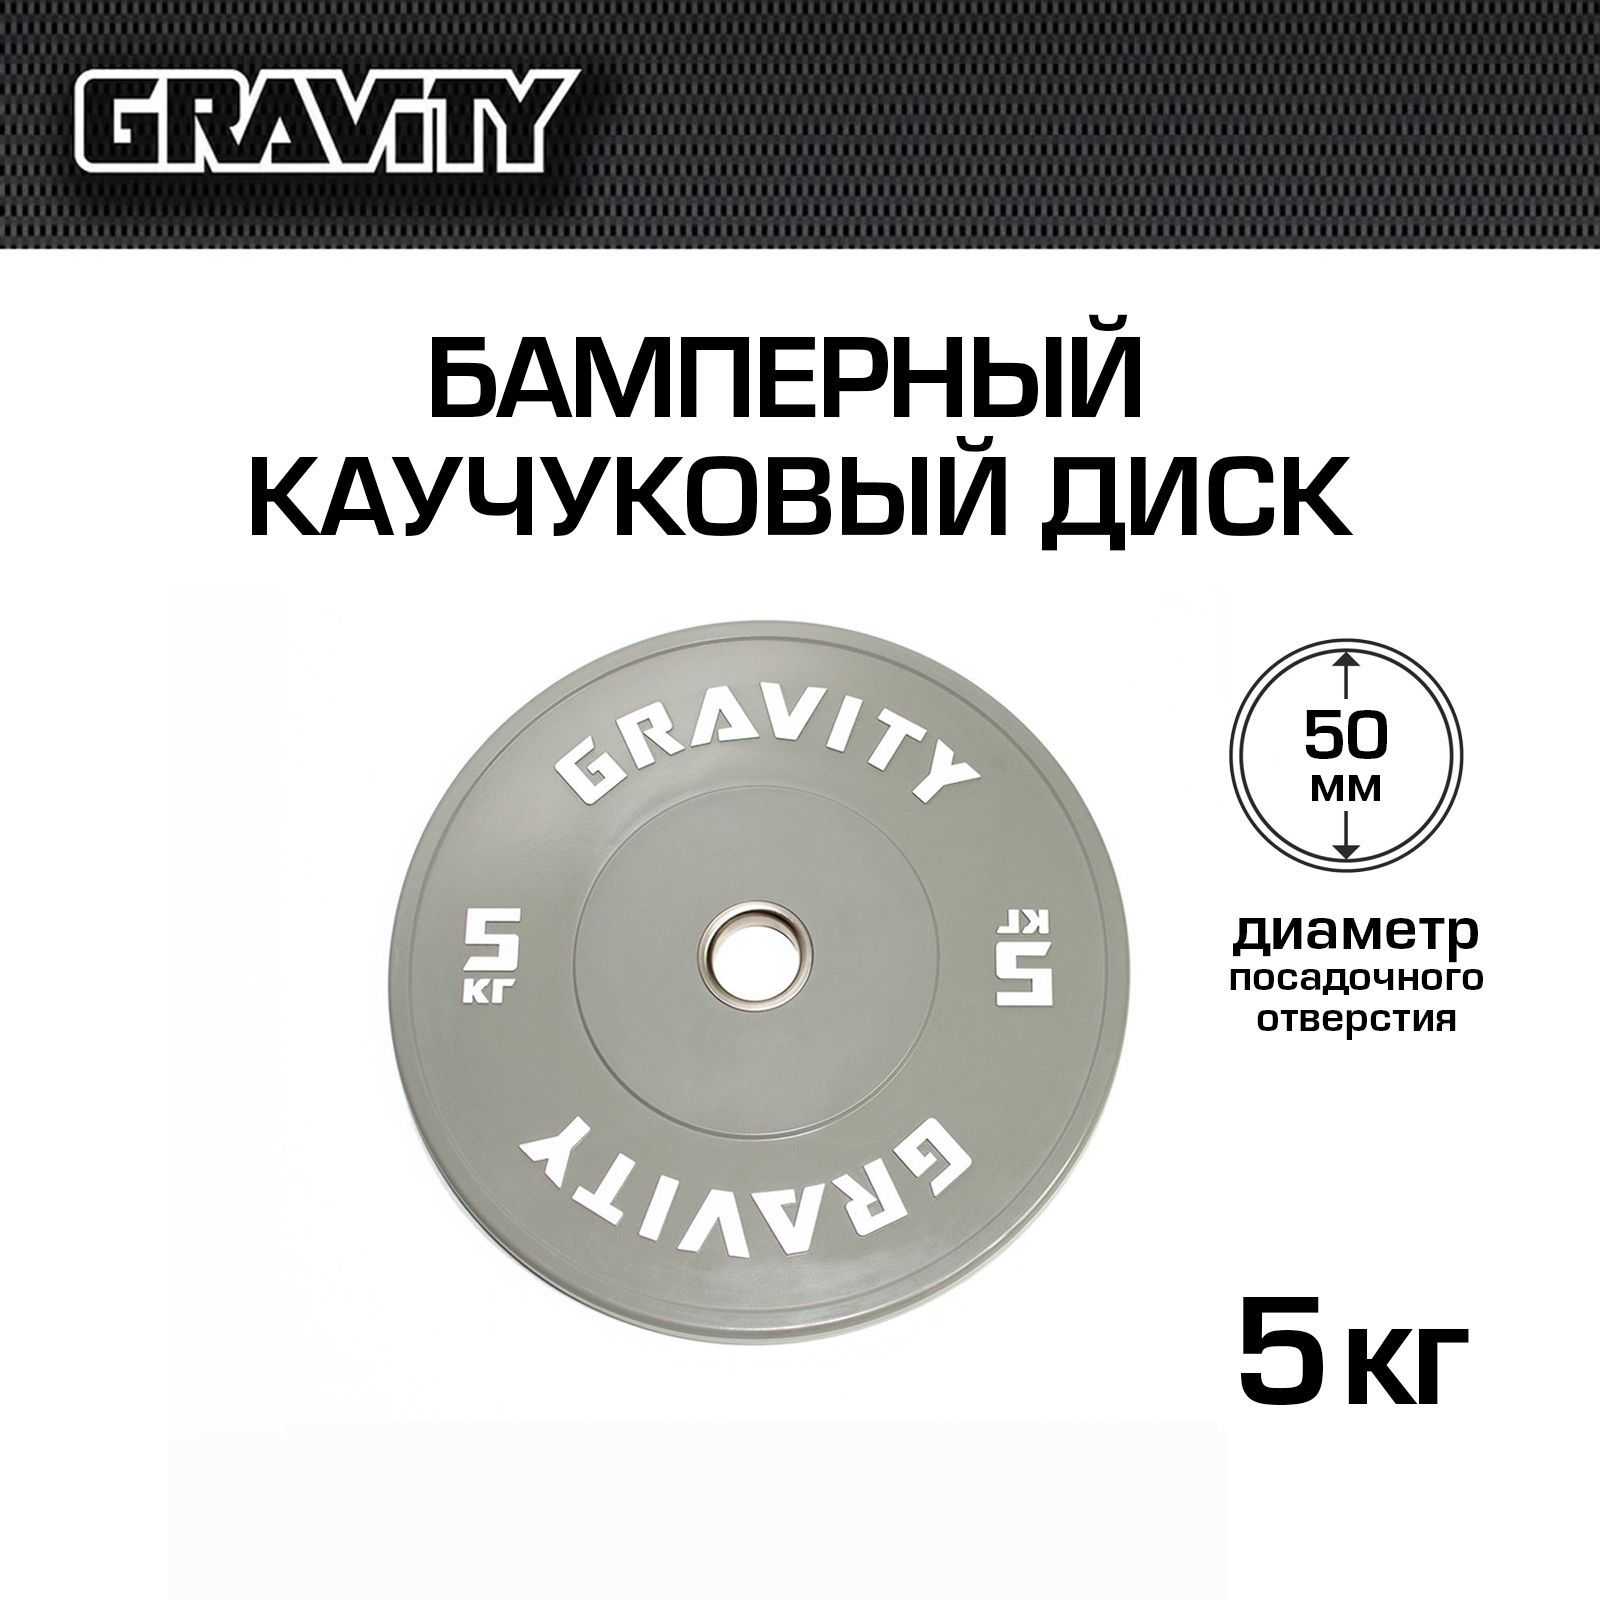 Диск для штанги Gravity SL1104N 5 кг, 50 мм